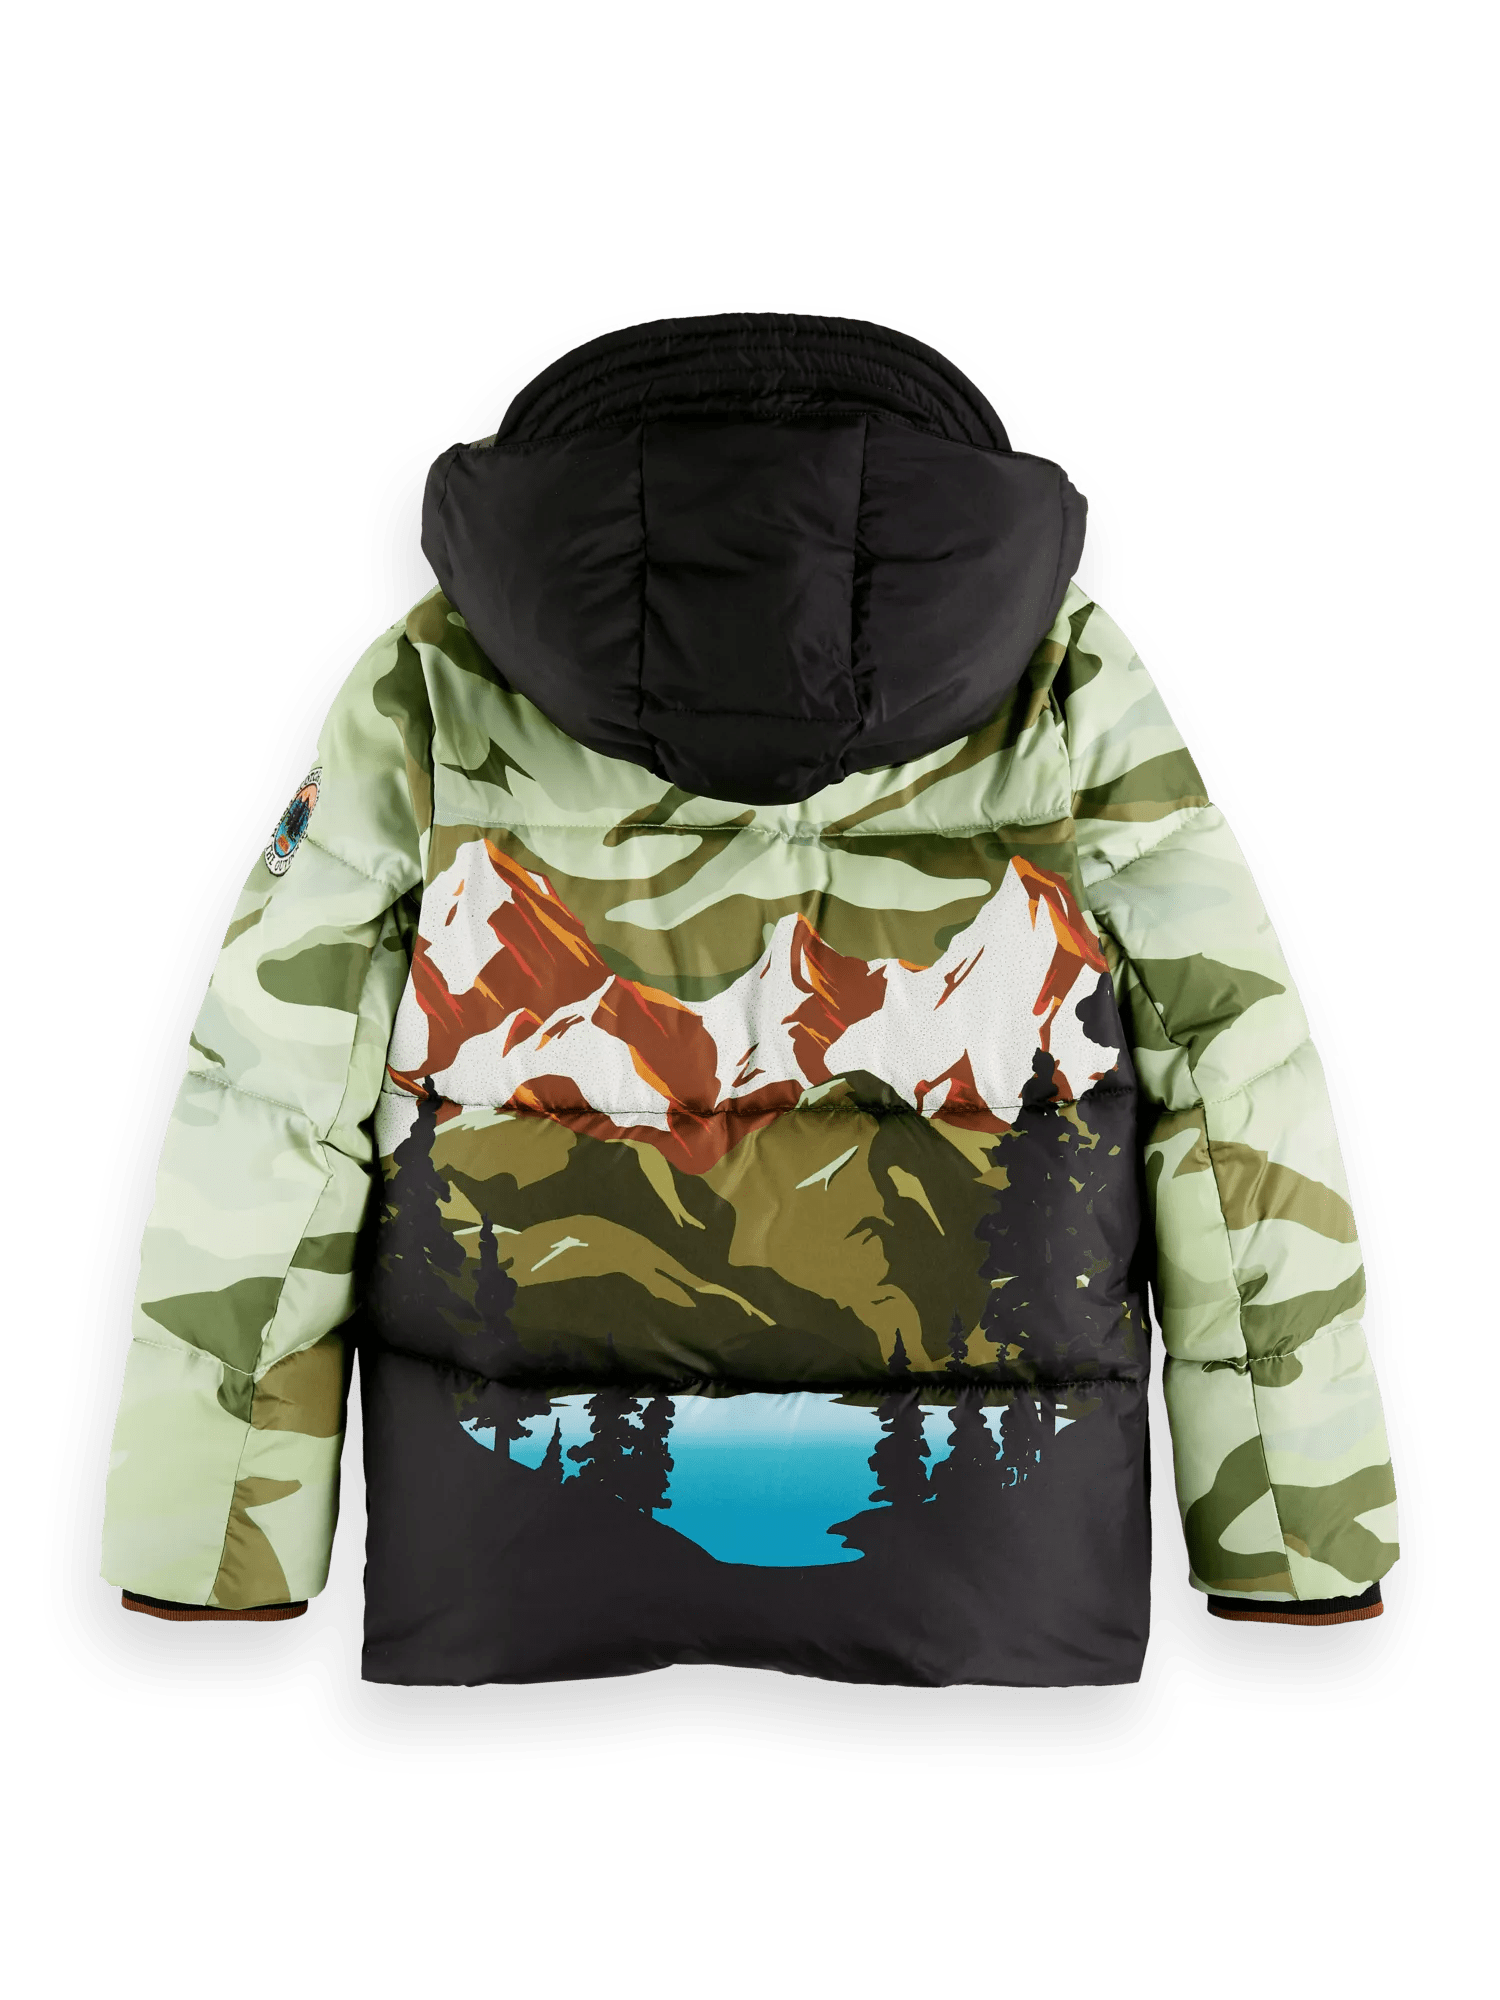 Hooded puffer artwork jacket